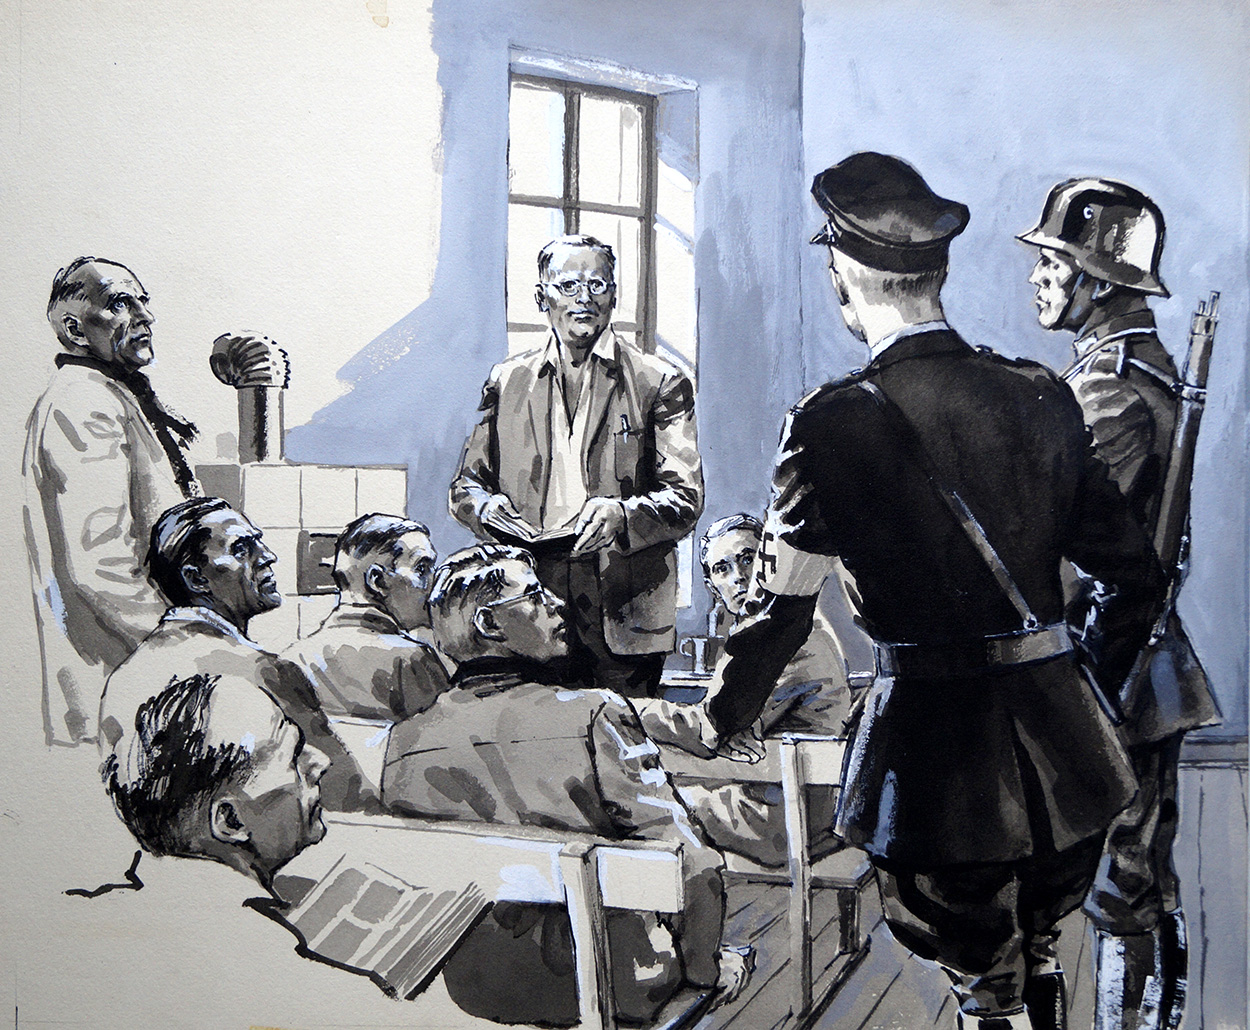 He Defied Hitler (Original) art by Neville Dear at The Illustration Art Gallery